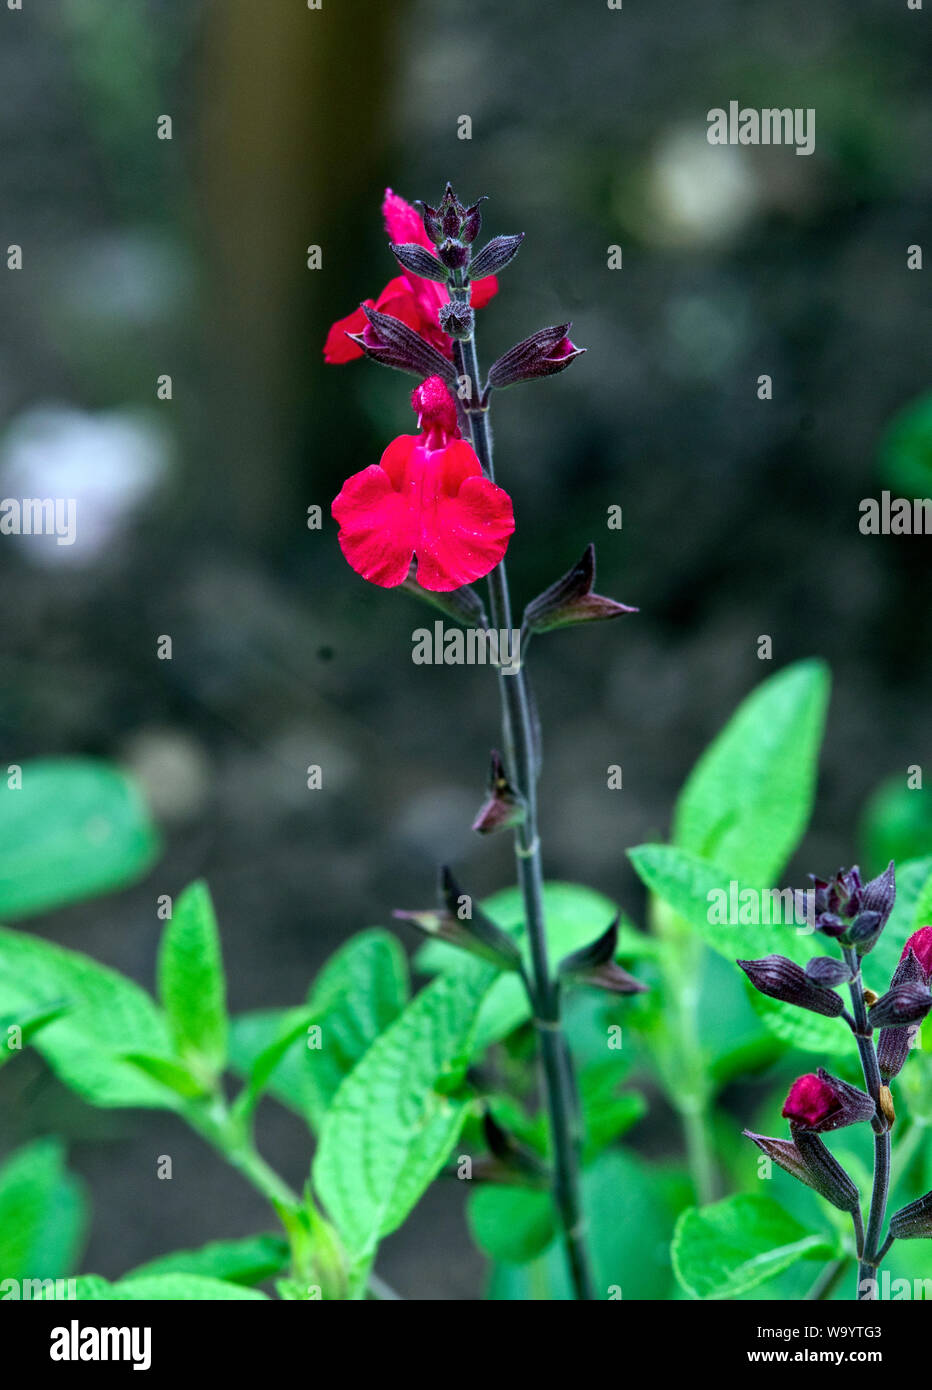 Salvia x jamensis 'Maraschino' Stock Photo